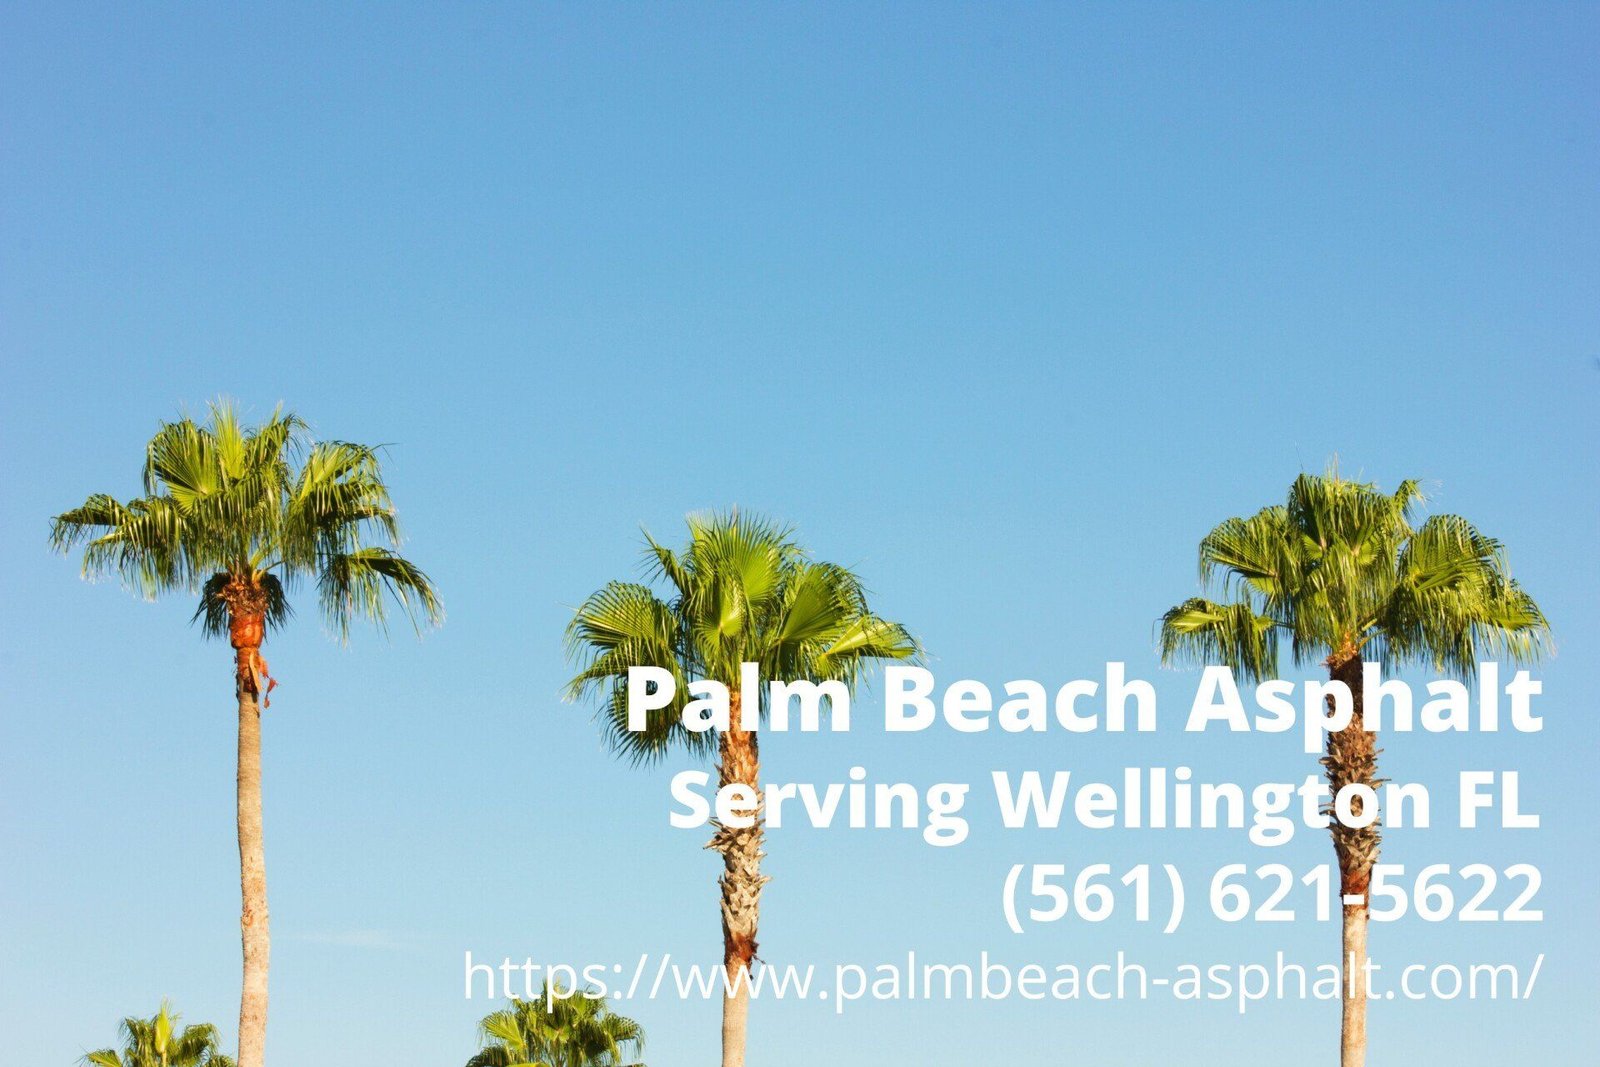 contact details of Palm Beach Asphalt, an asphalt company serving Wellington, FL